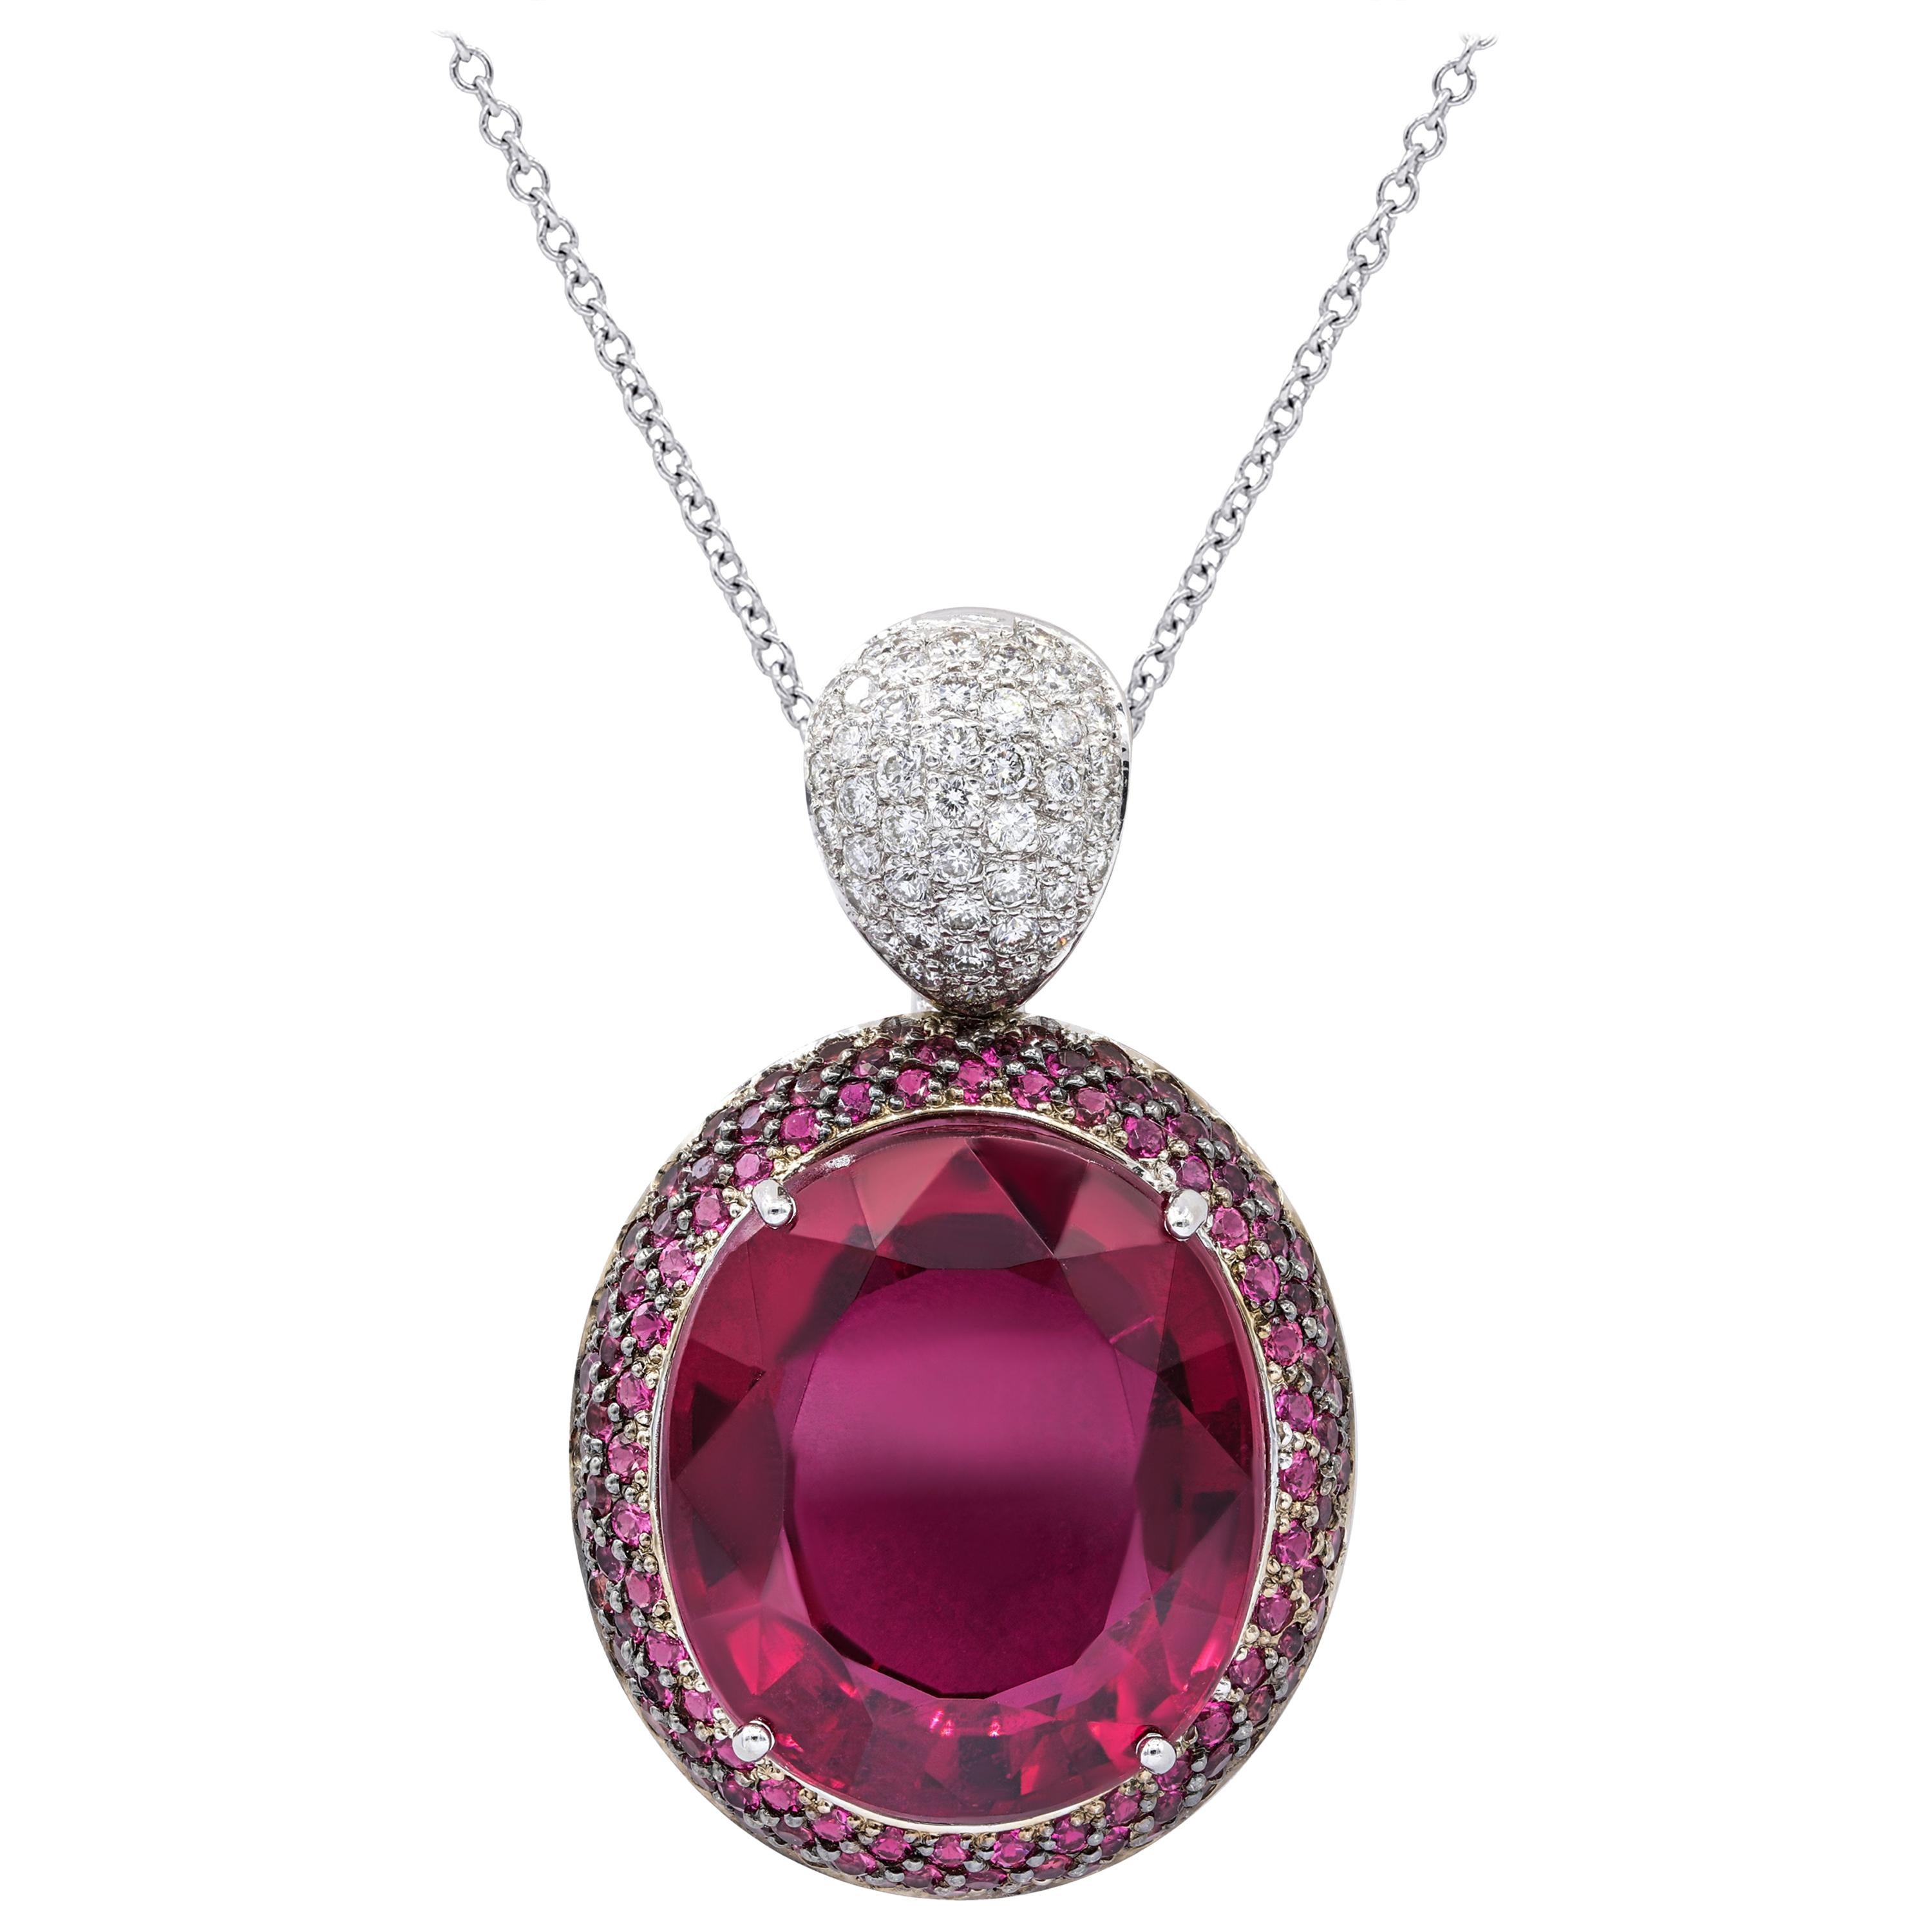  Tourmaline Pink Diamond Pendant Necklace with Tourmaline Oval Shape For Sale